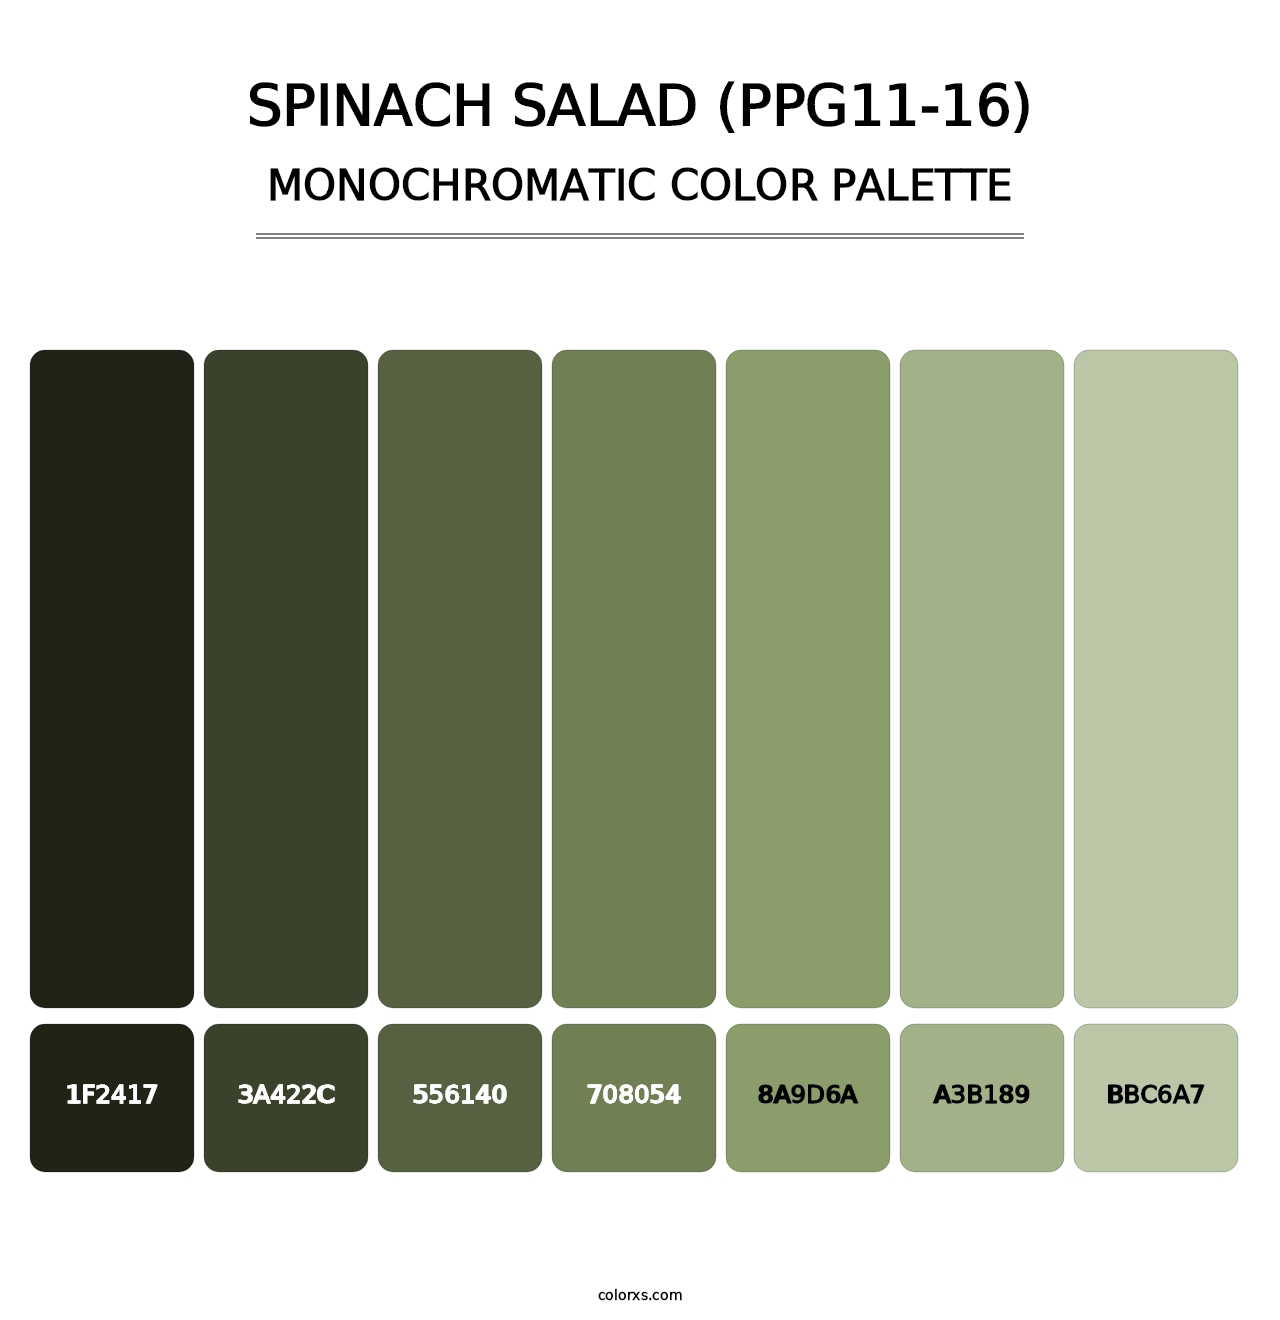 Spinach Salad (PPG11-16) - Monochromatic Color Palette